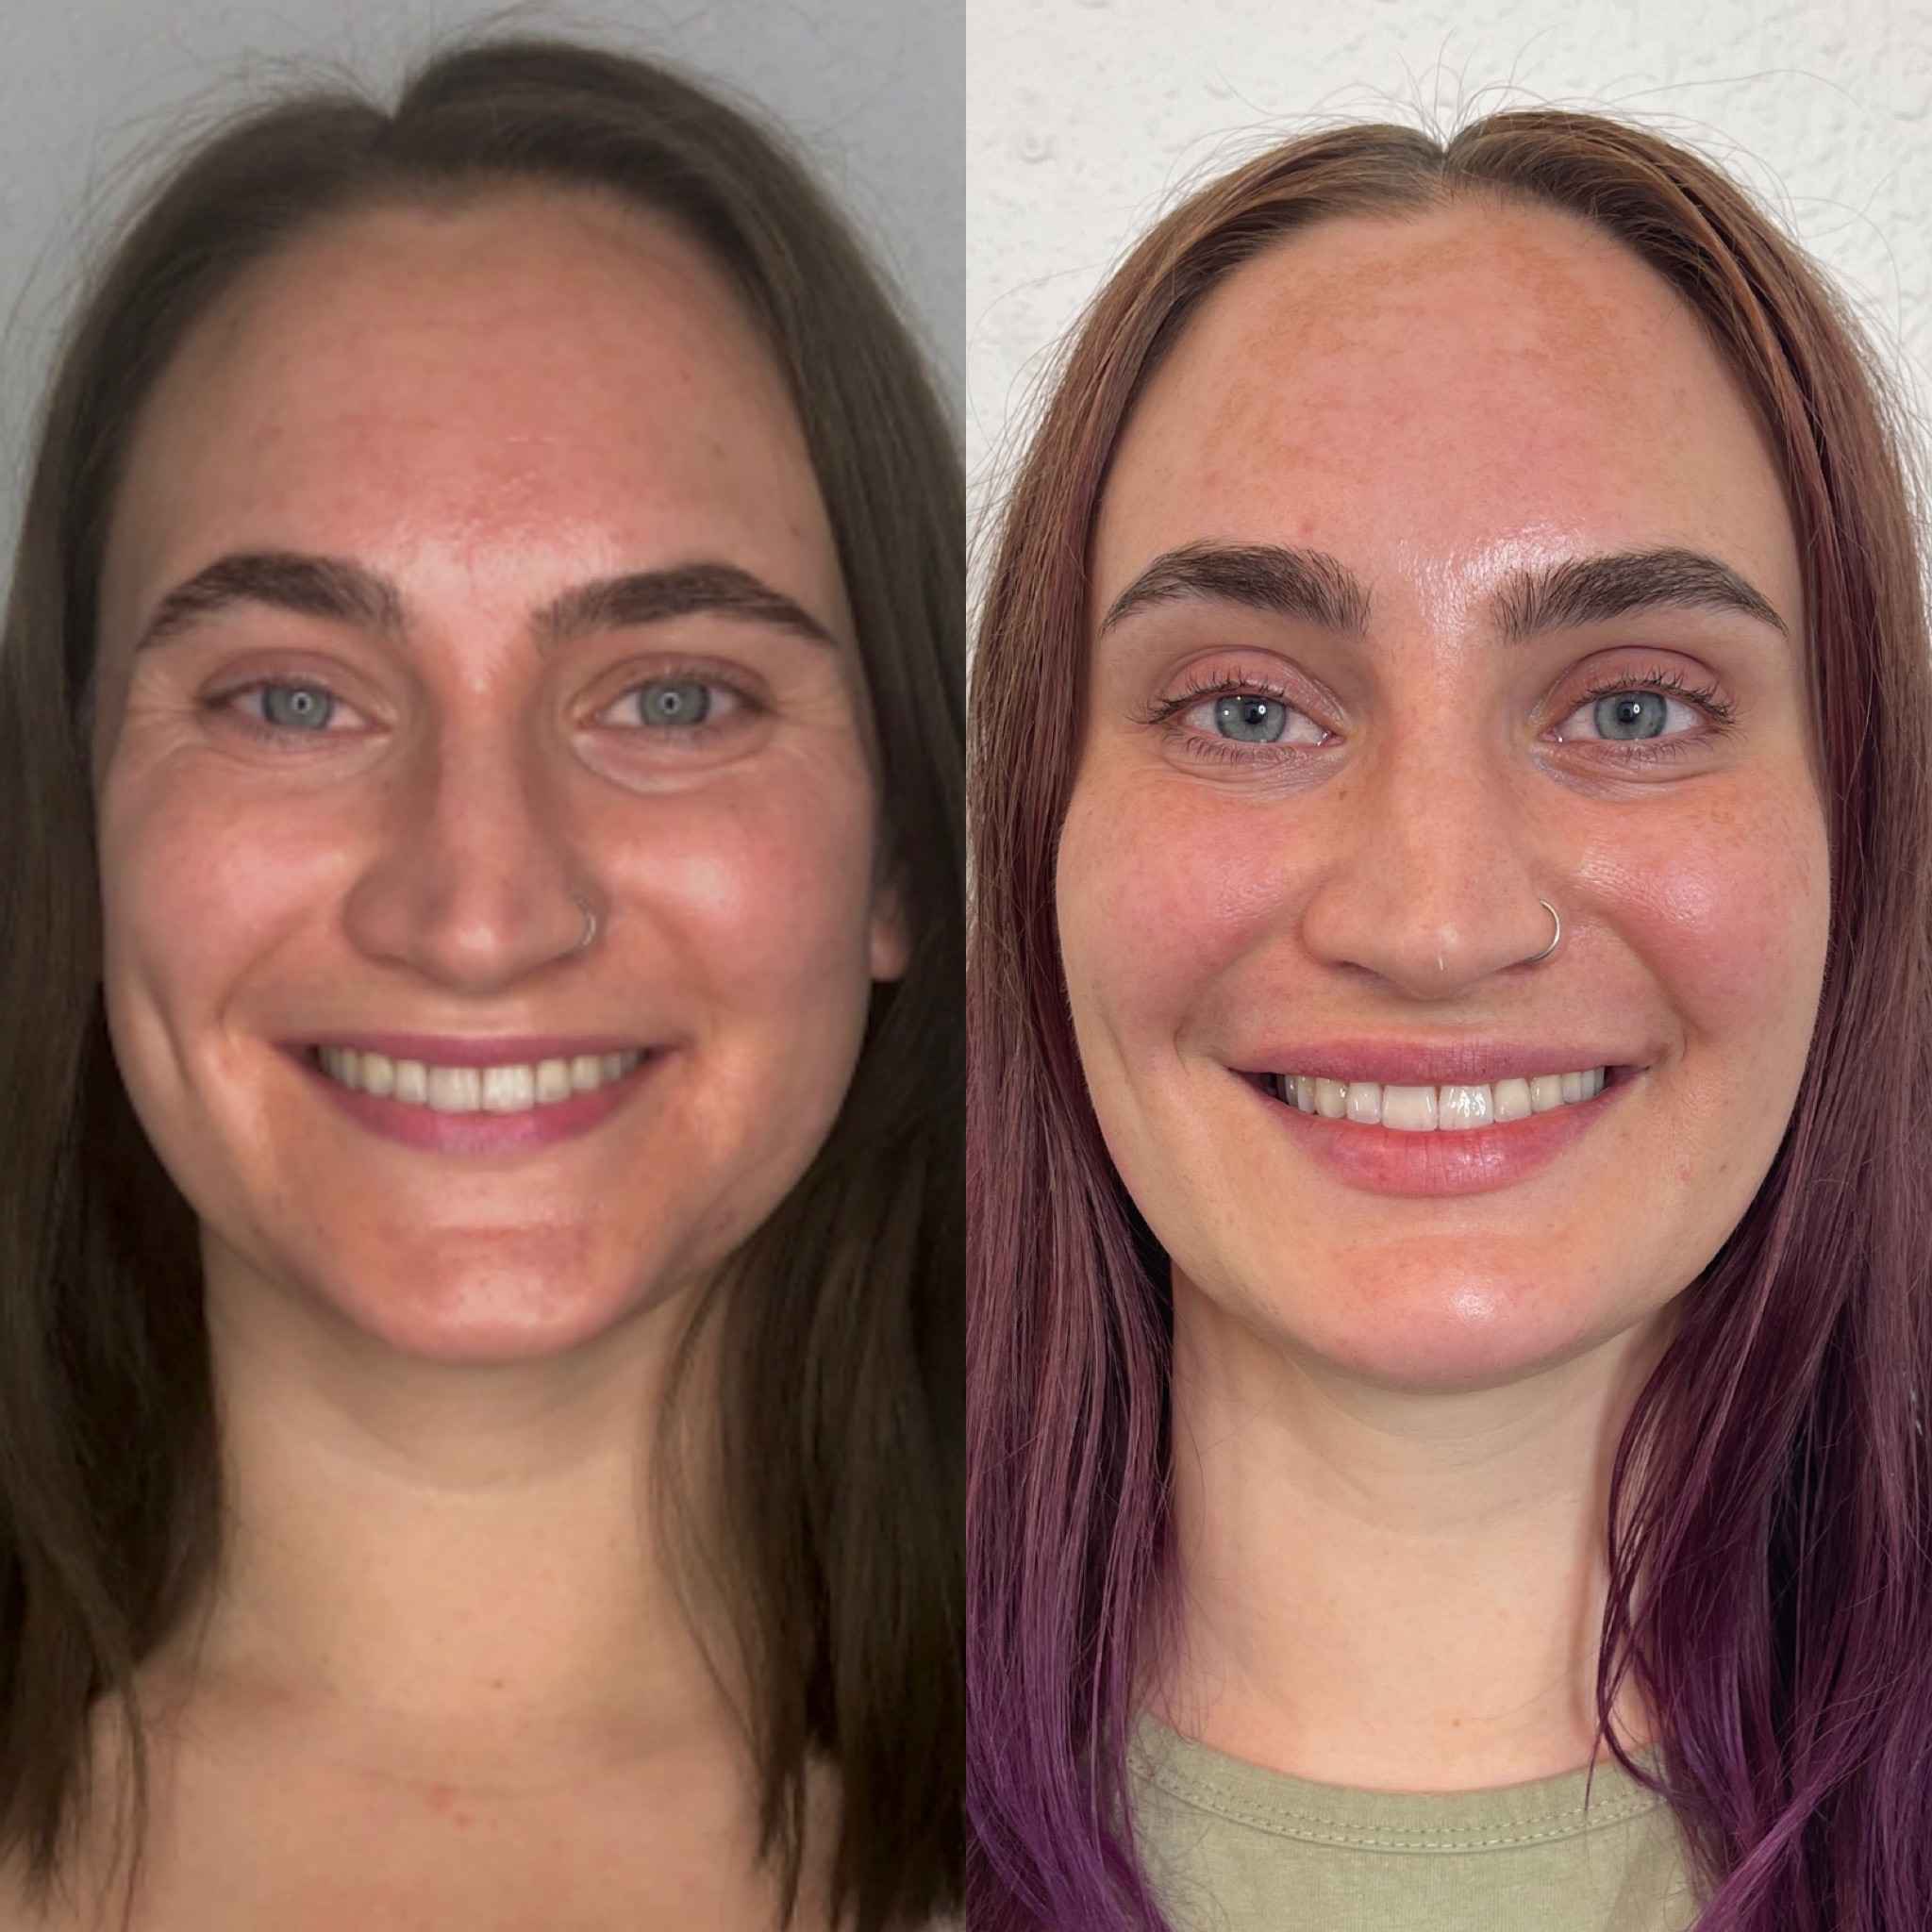 Smiley Face After Full Face Rejuvenation Treatment | Onyx Medical Aesthetics | Homann Dr. S.E. suite B Lacey, WA